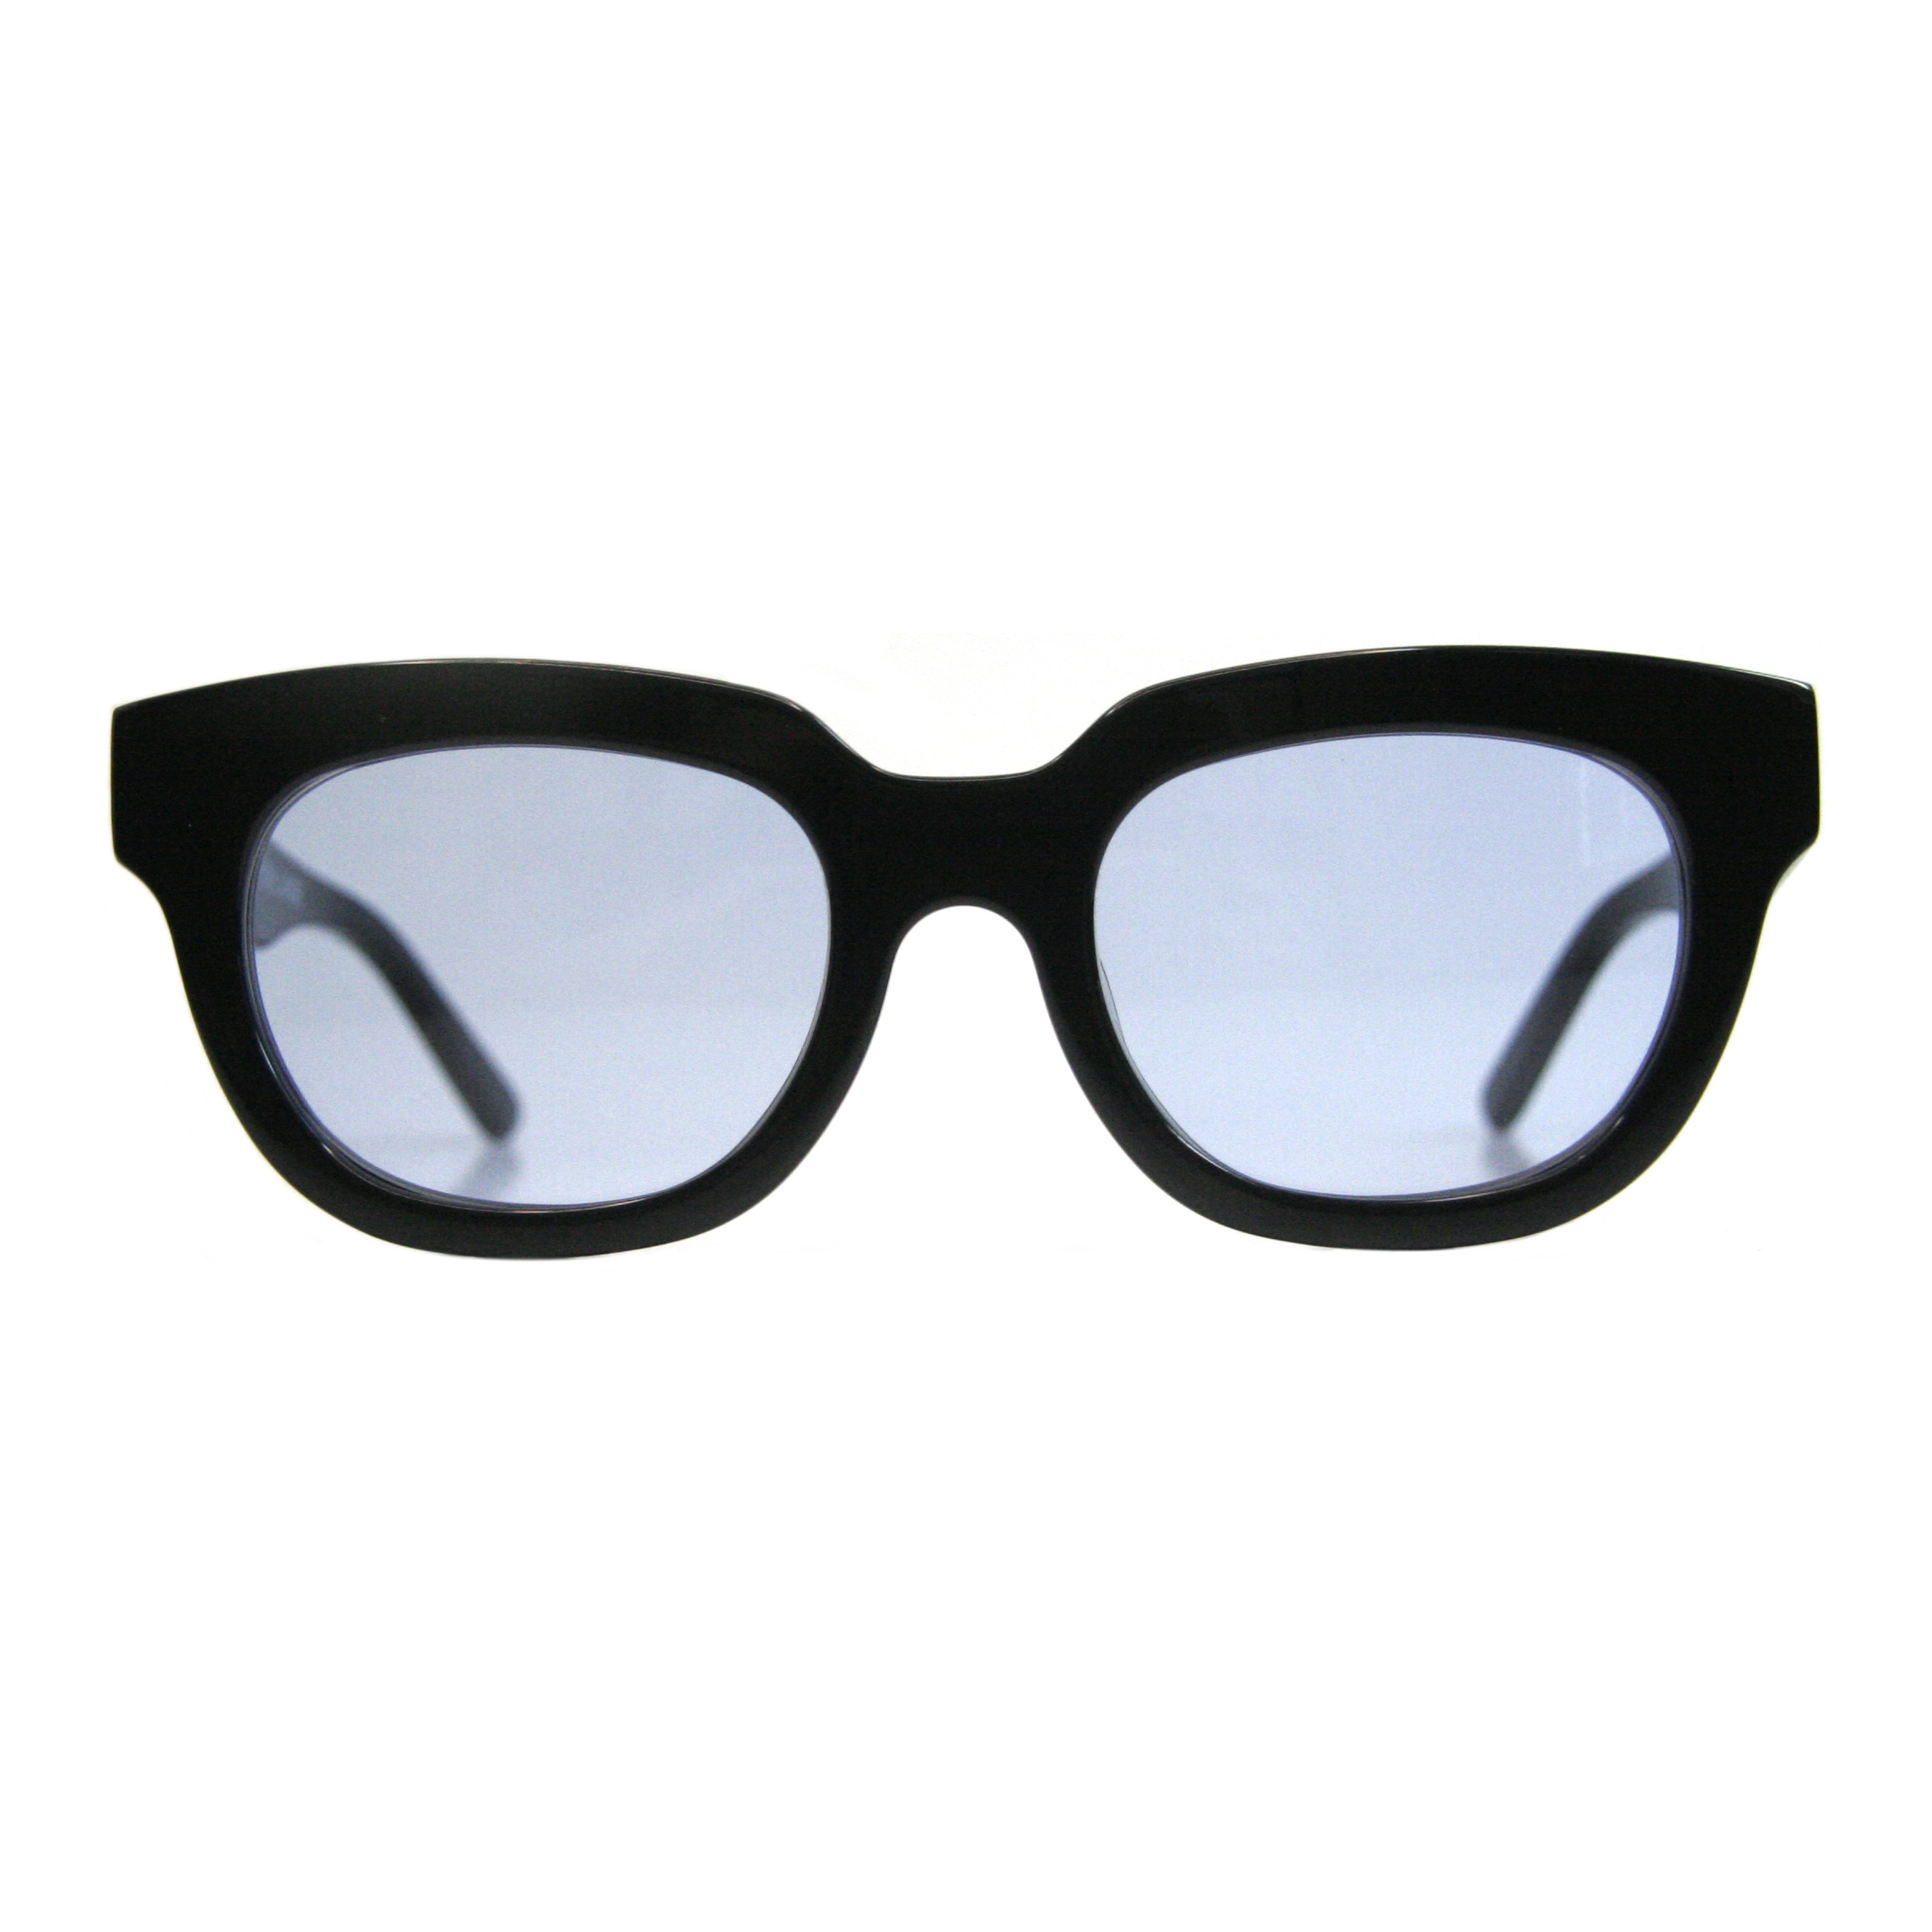 【meSmart公式】【送料無料】富士山眼鏡ORIGINAL PEDAN ペダン 伊達メガネ サングラス 黒縁 ブラック ブルー  ワイドフレーム メンズ 度なし EYEWEAR ITEMS meSmart